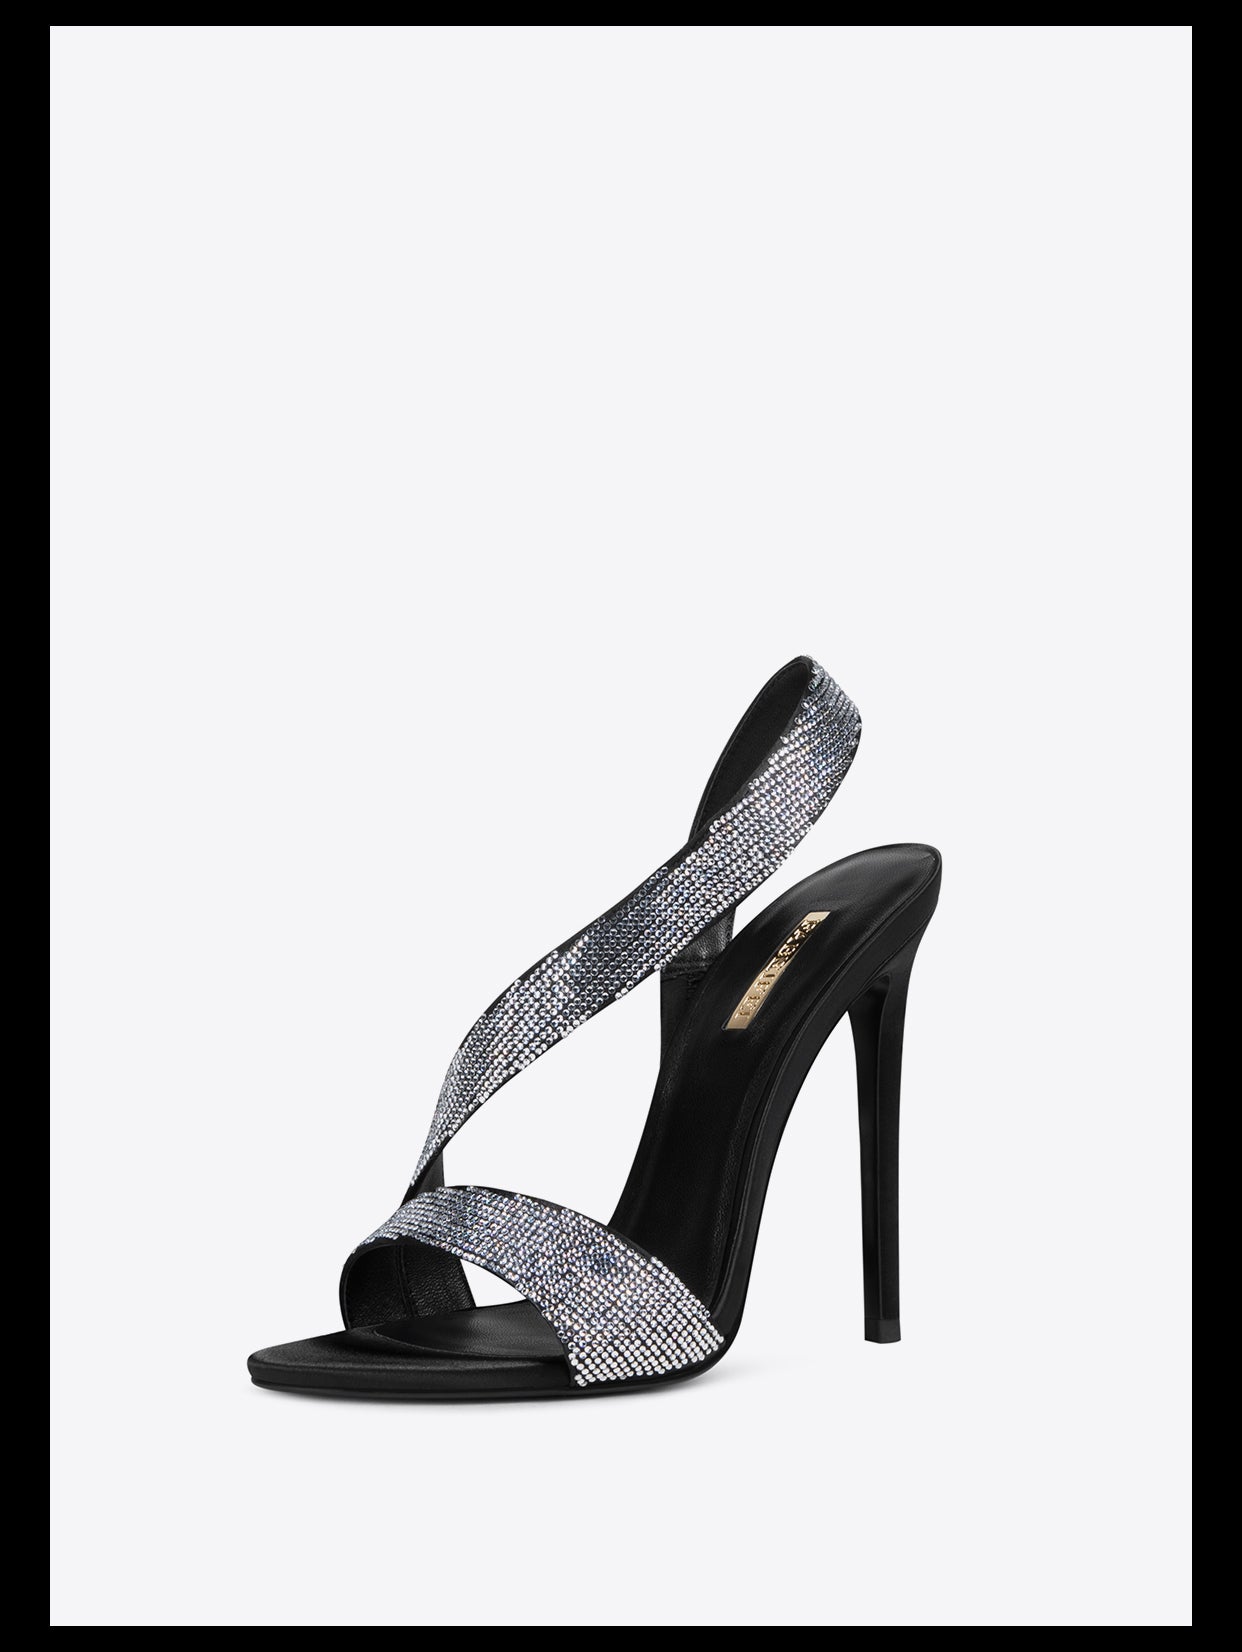 Rhinestone stiletto open toe high heels sandals